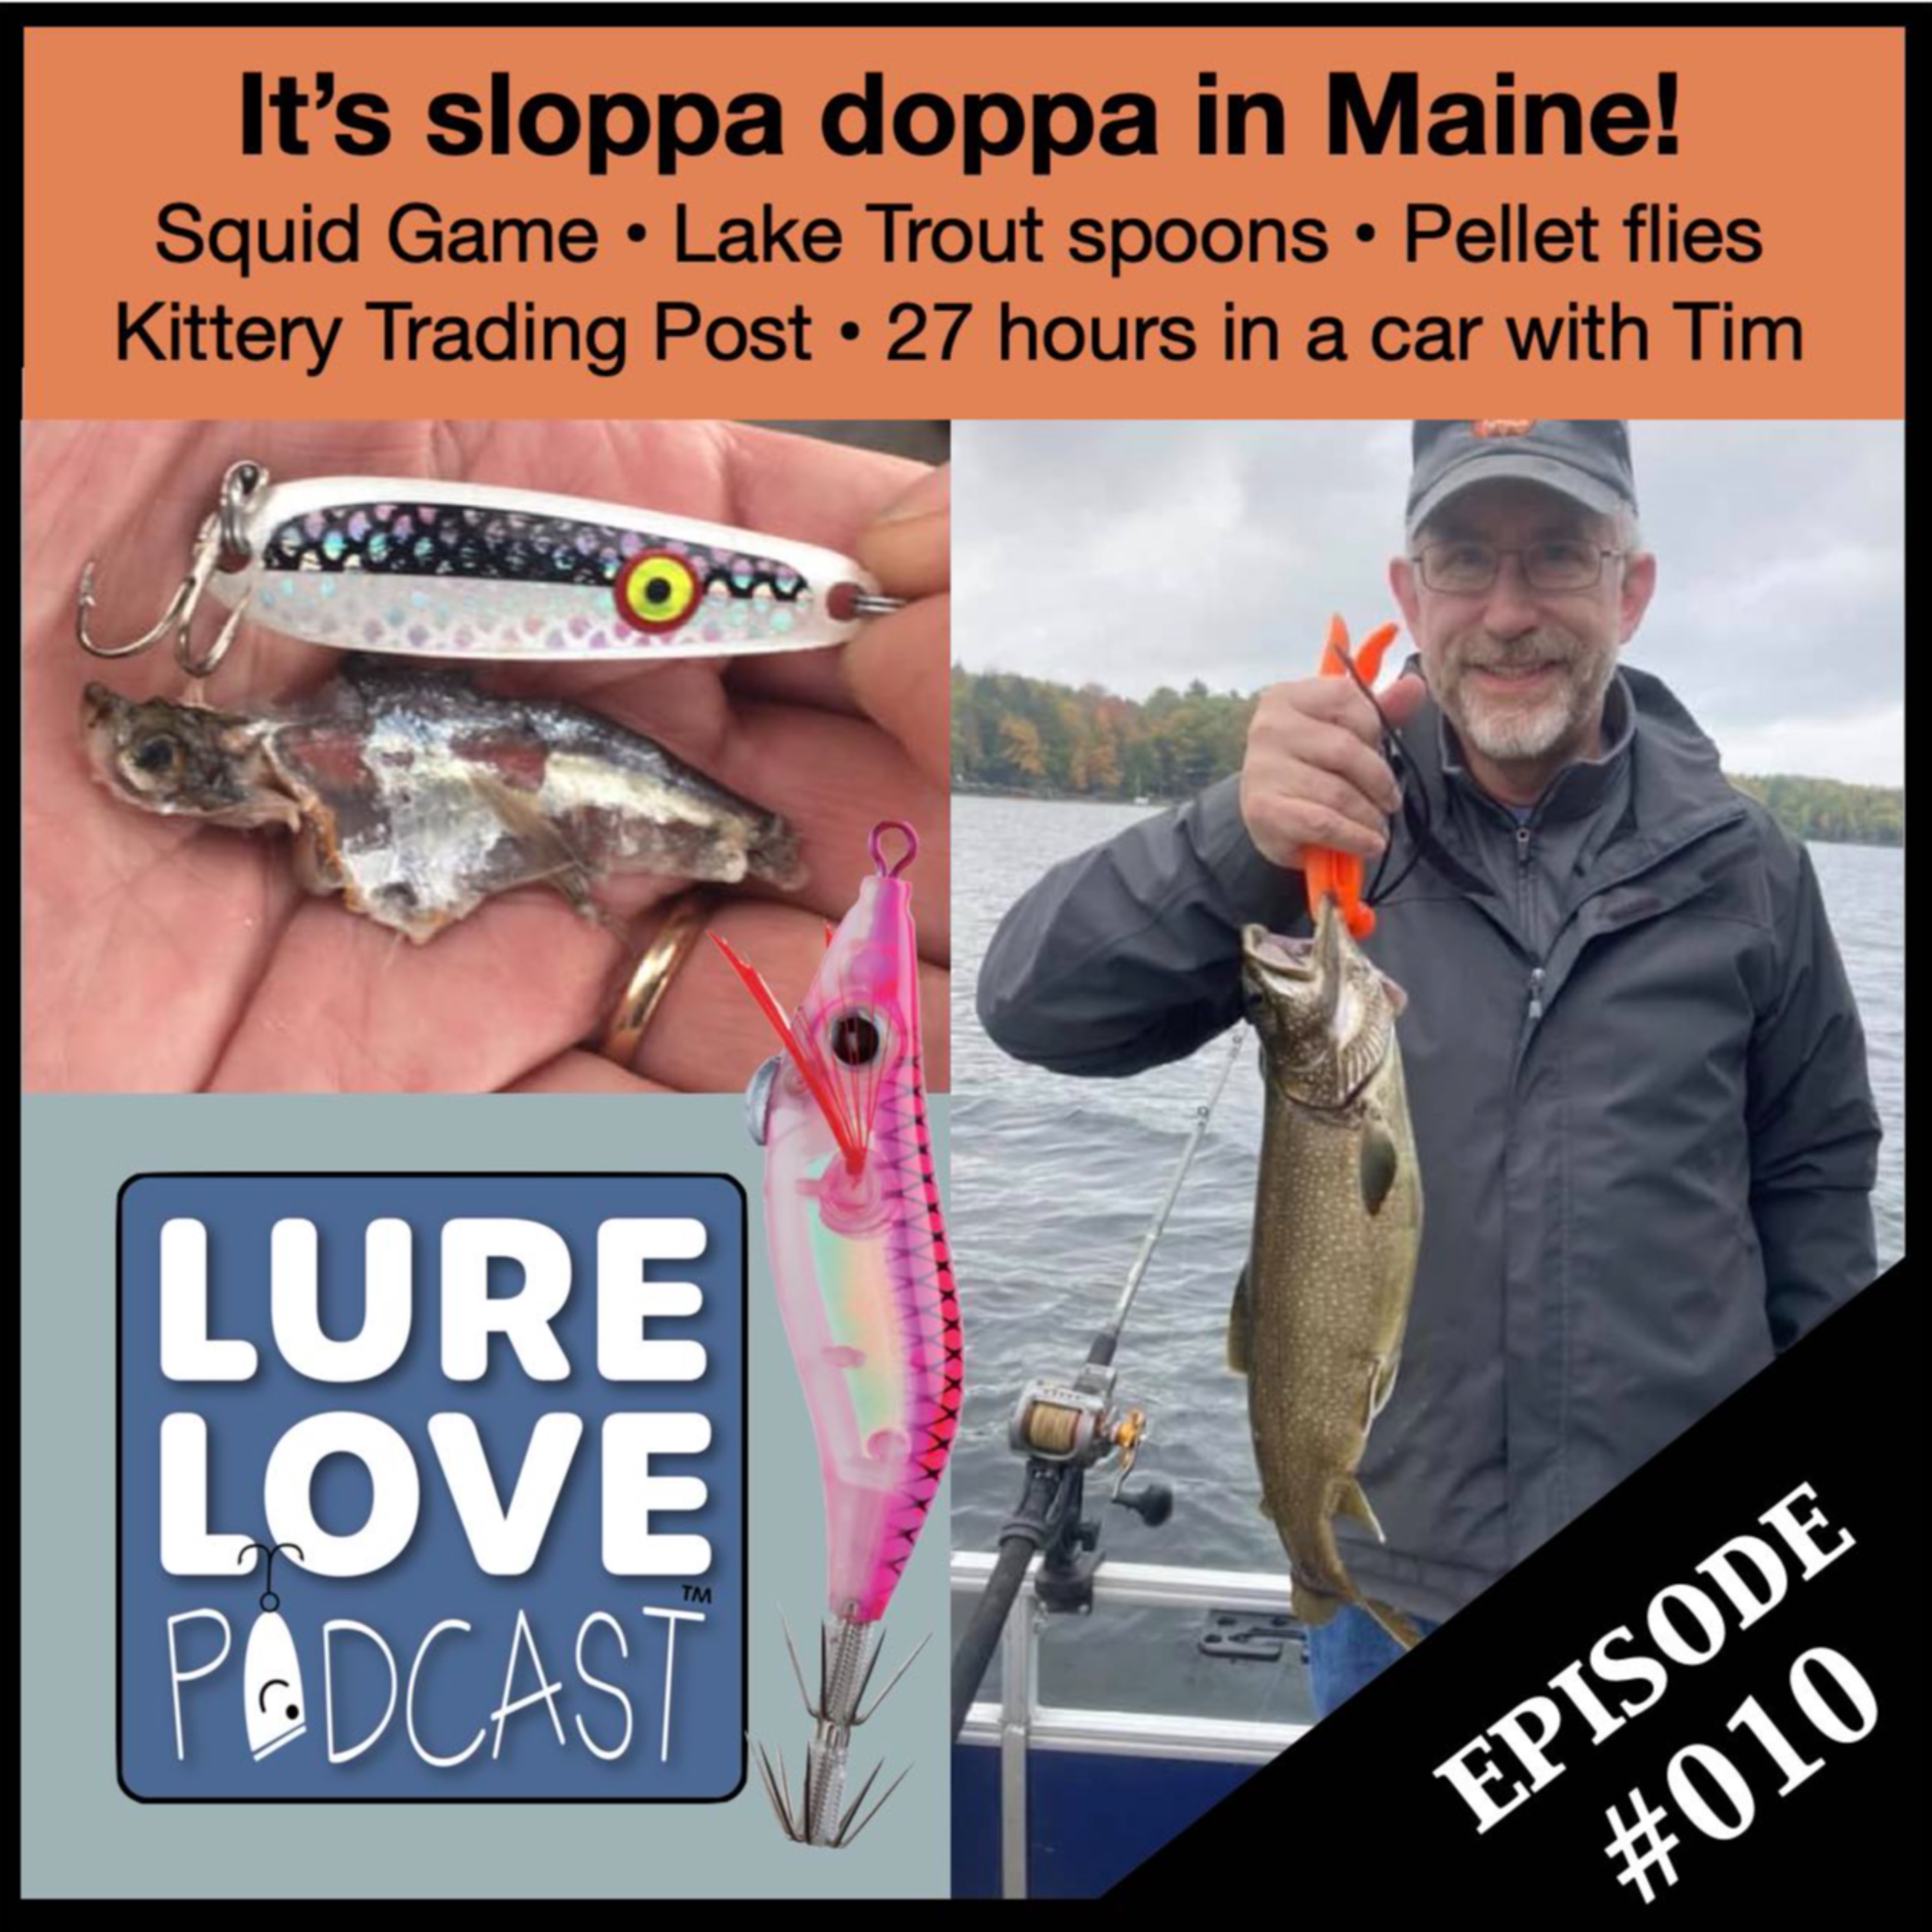 It‘s sloppa doppa in Maine! Image